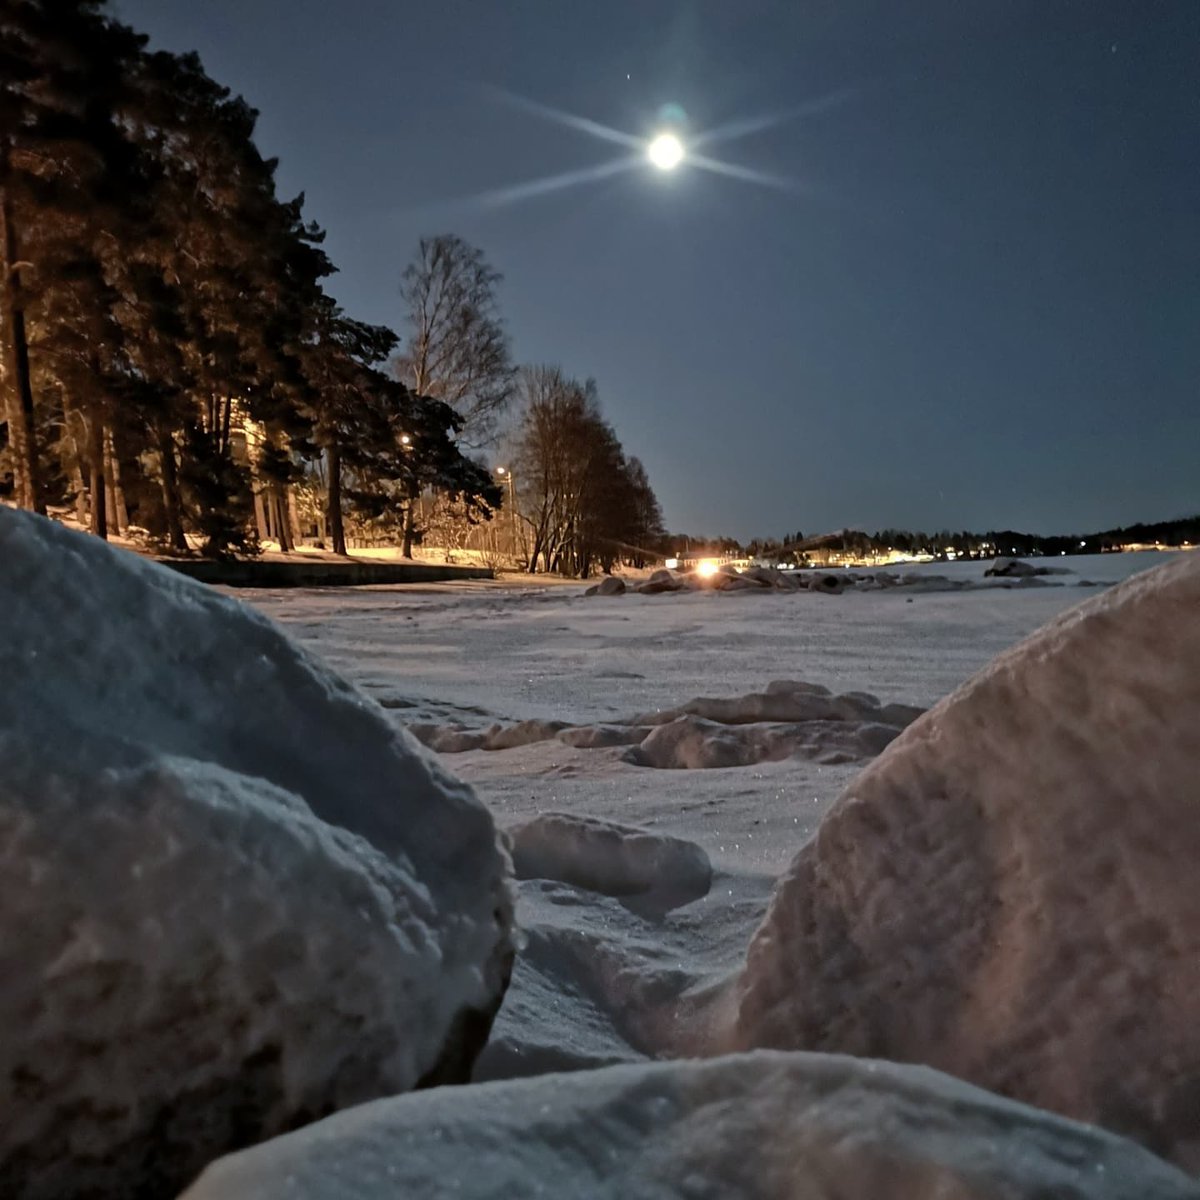 Longer evening walk. The Moon is so bright tonight! It's hard to believe it's actually dark gray. Guess it tells about how bright the sun is. #Moon #Winter #Snow #StarryNight #Walking #Mustikkamaa #Kulosaari #Kalasatama #MyHelsinki #Helsinki #Finland https://t.co/oQxx6uICmw